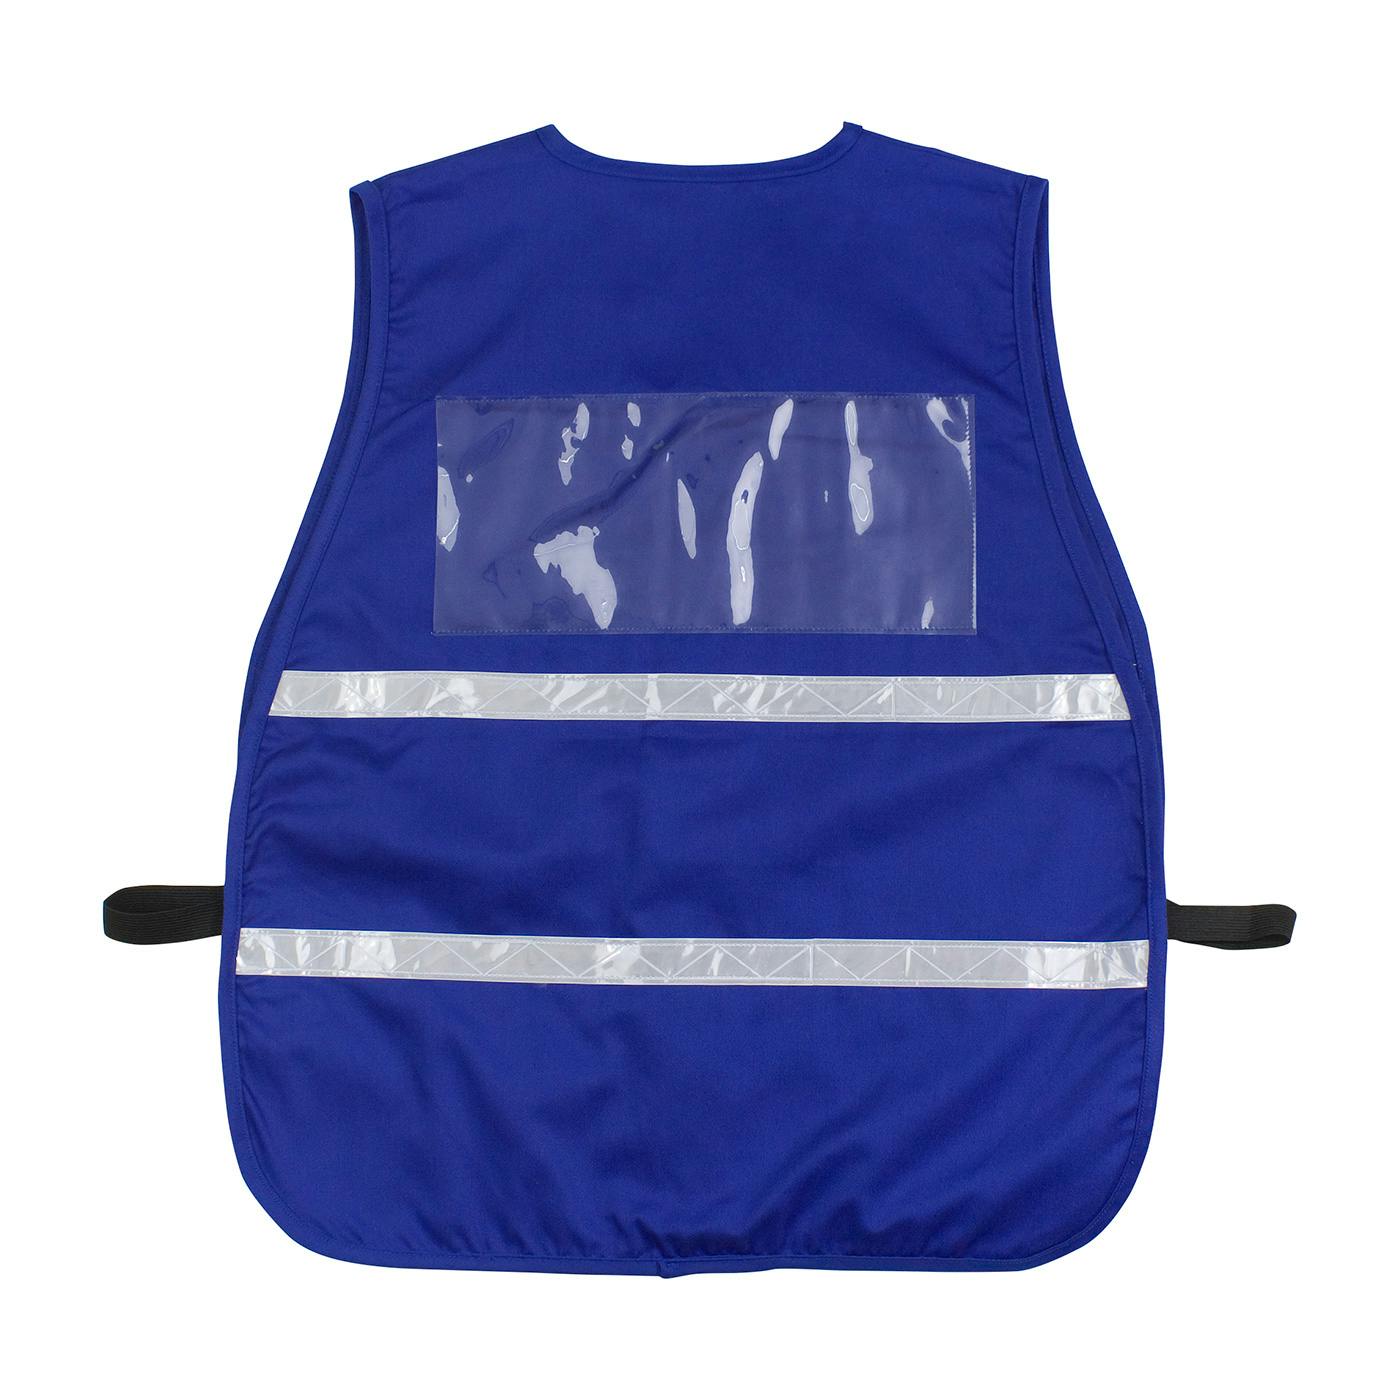 Non-ANSI Incident Command Vest - Cotton/Polyester Blend, Blue (300-2504)